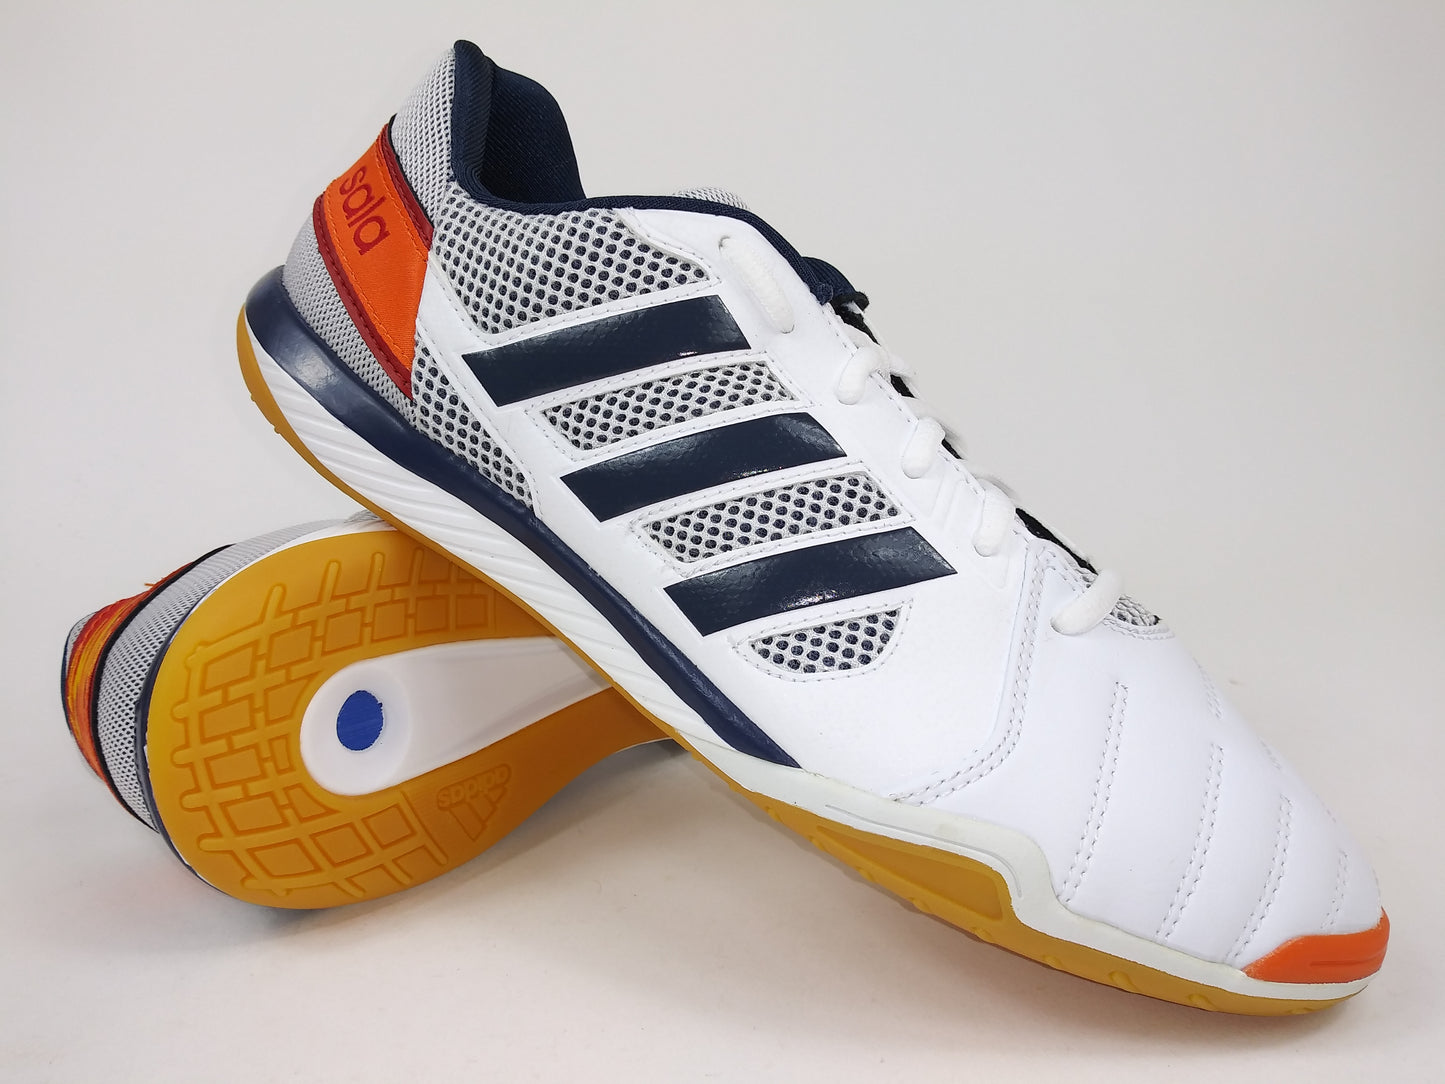 Adidas freefootball TopSala Indoor Shoes White Navy